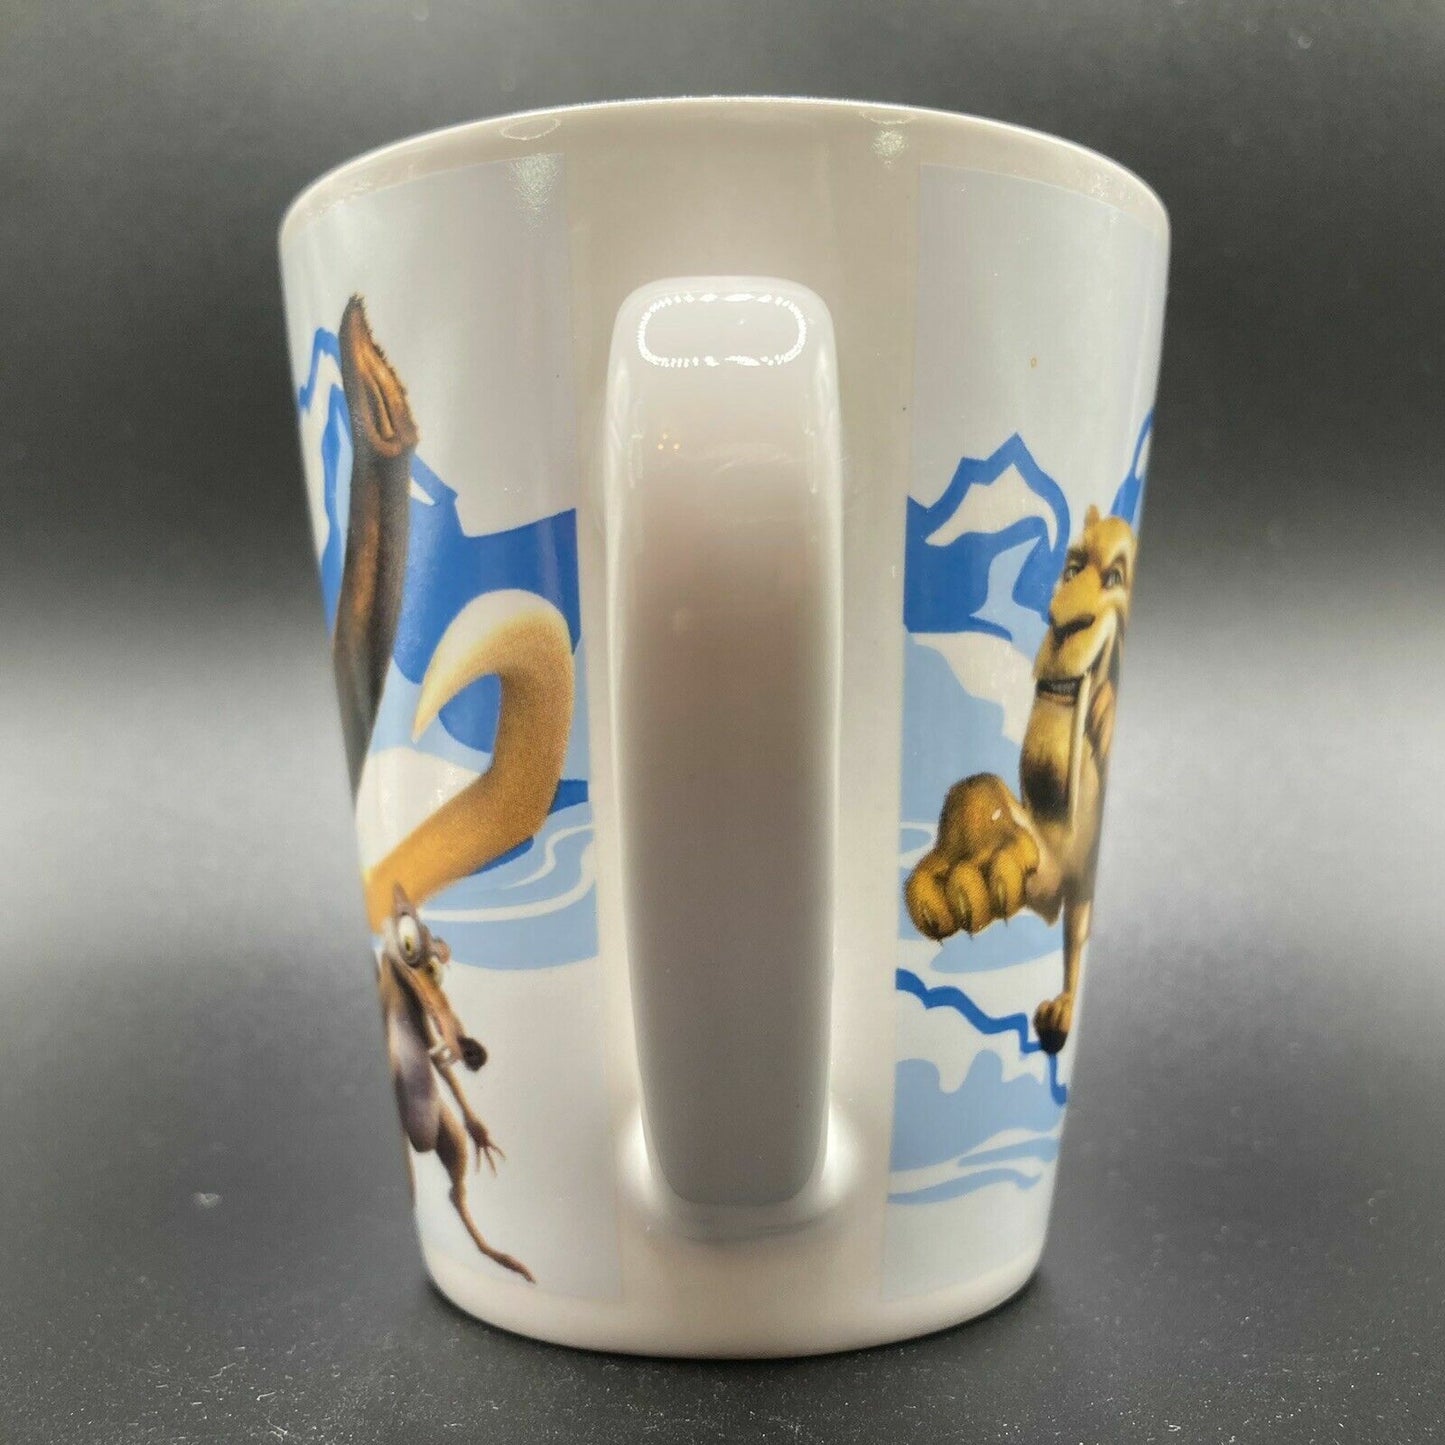 Kids Mug Character Ice Age Drinking Cup Ceramic Children Gift Set 350ML